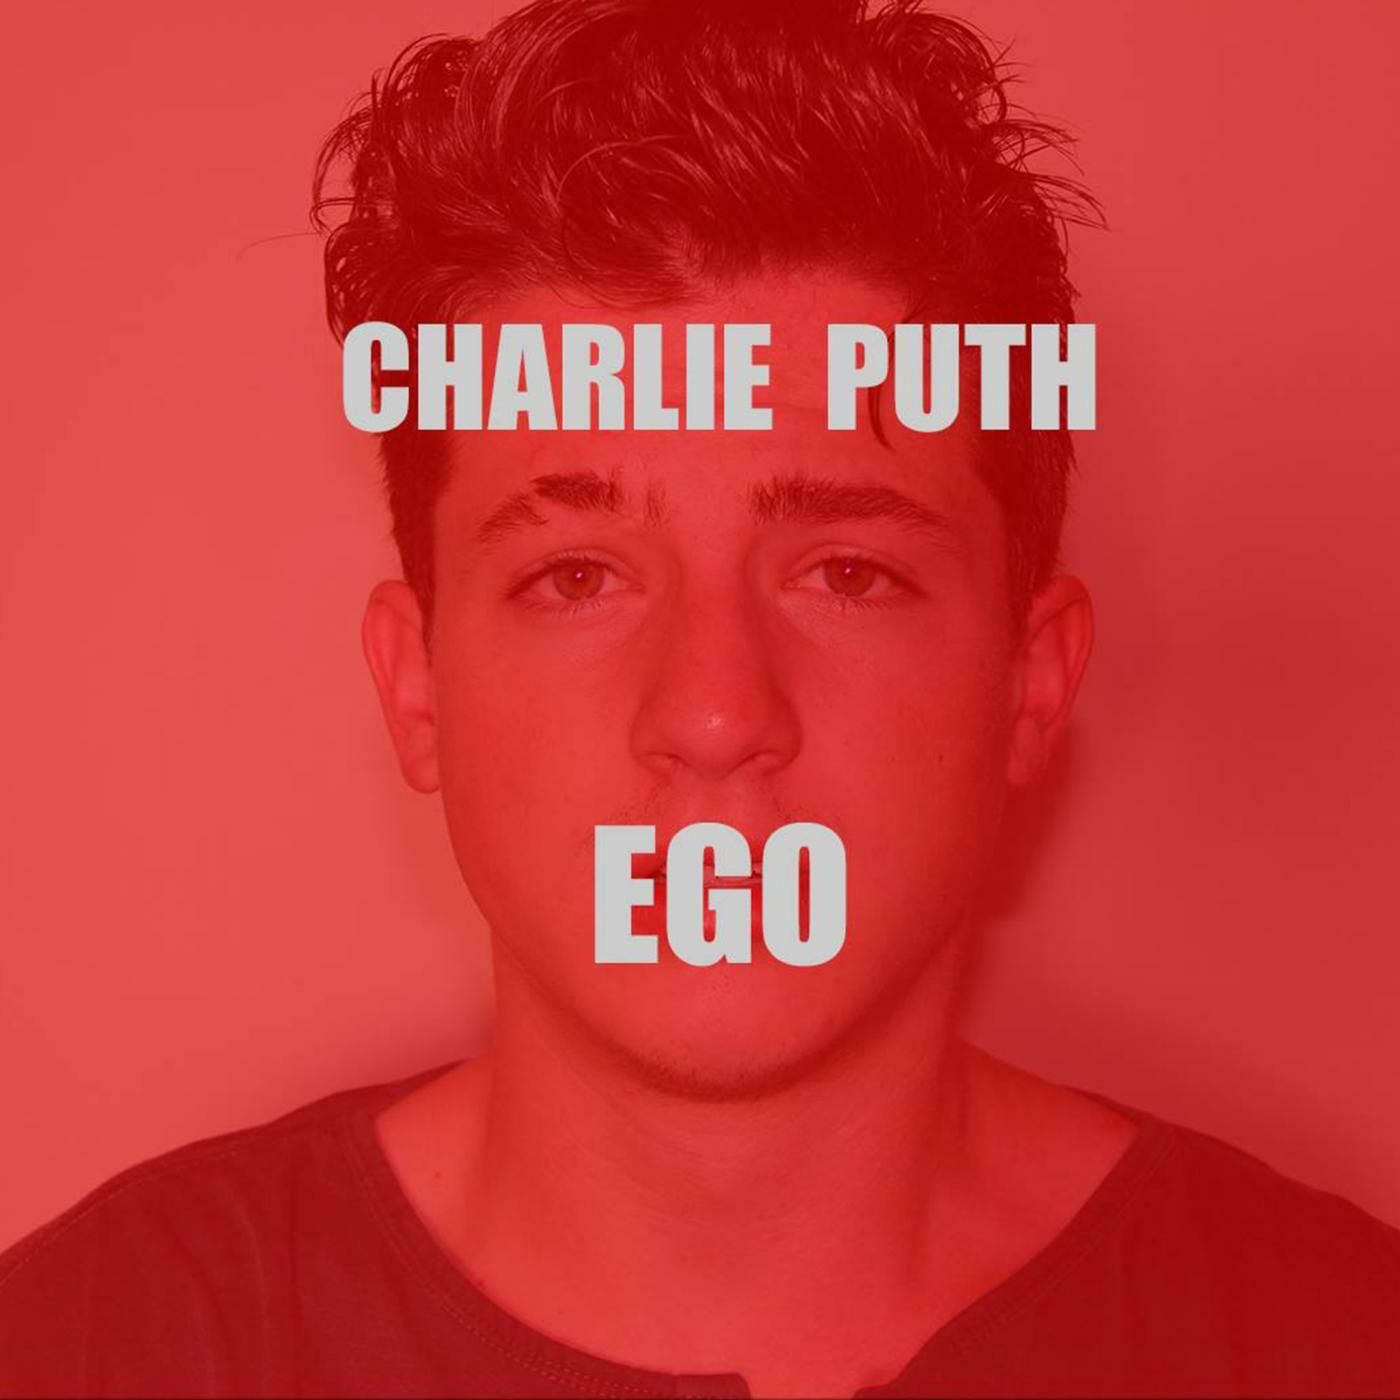 Listen Free to Charlie Puth - Ego Radio on iHeartRadio ...